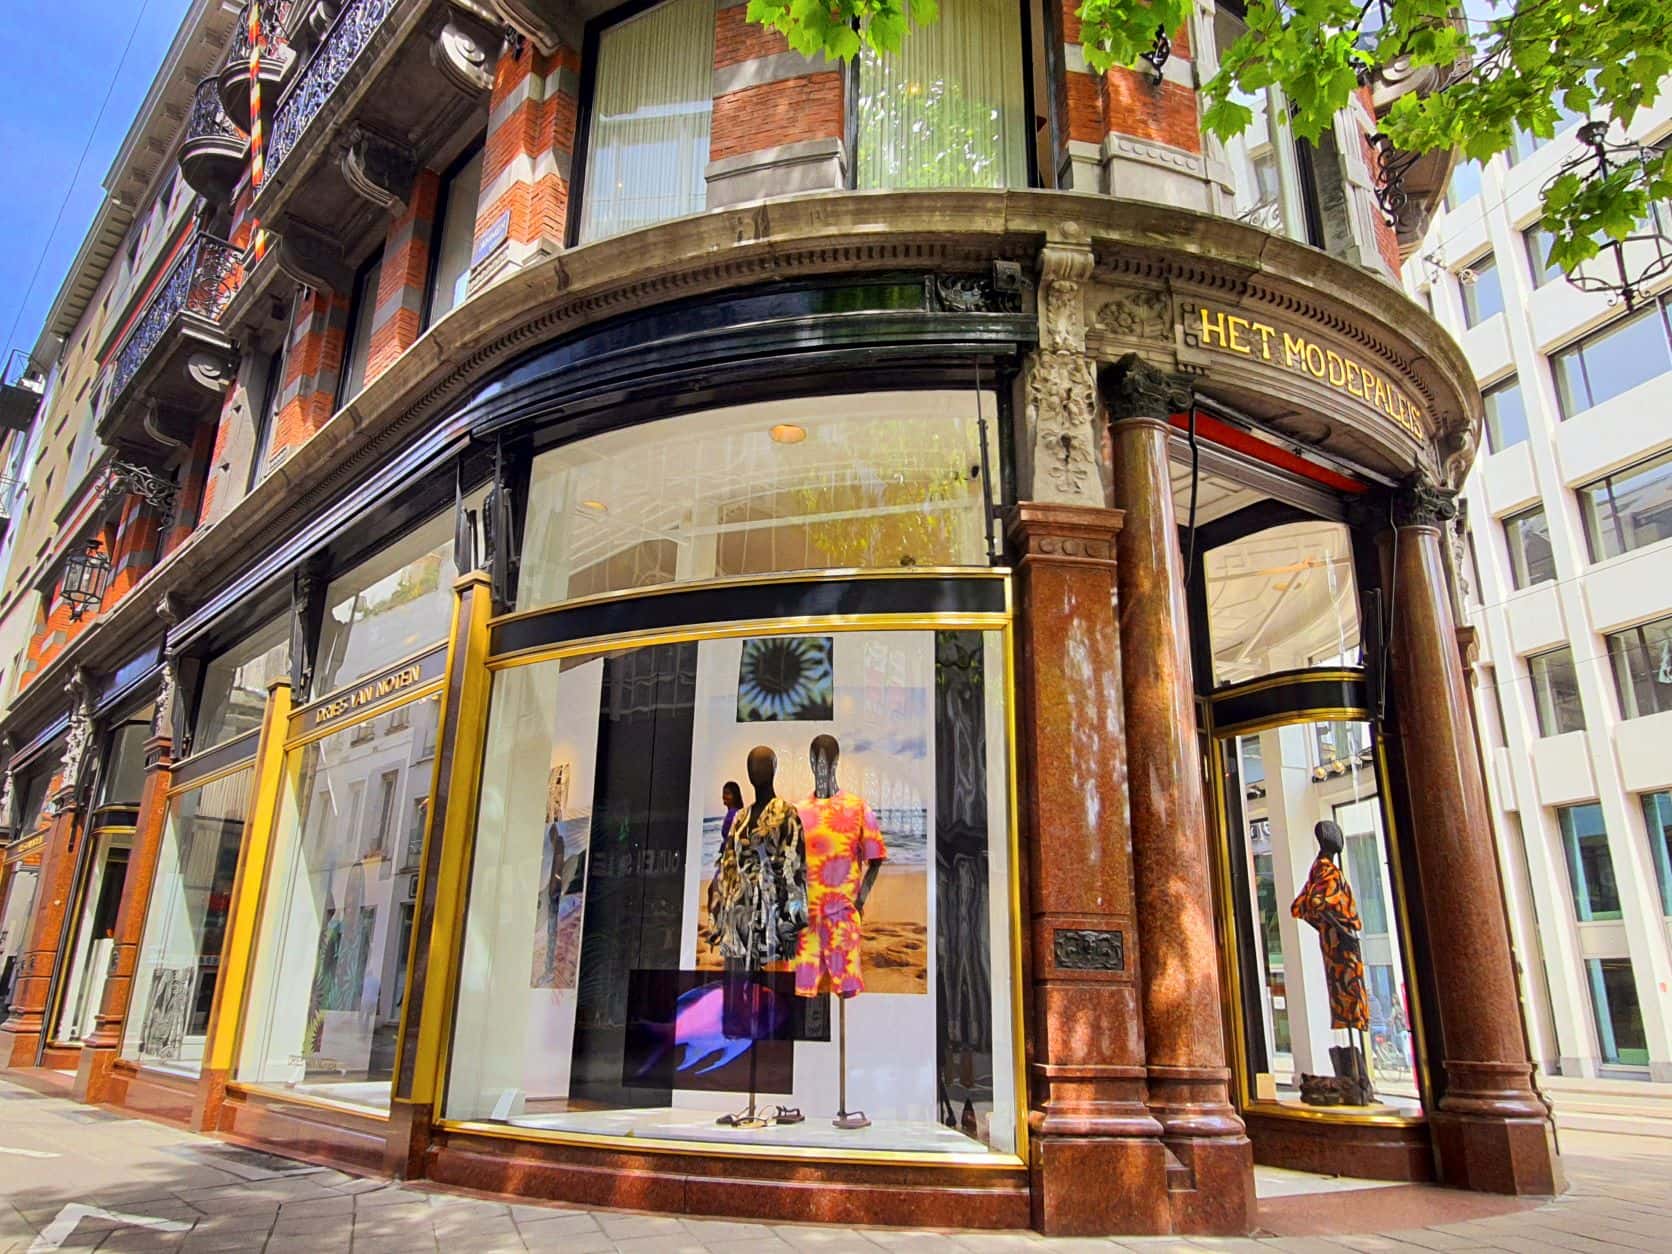 Boutique Modepaleis in Antwerpen 